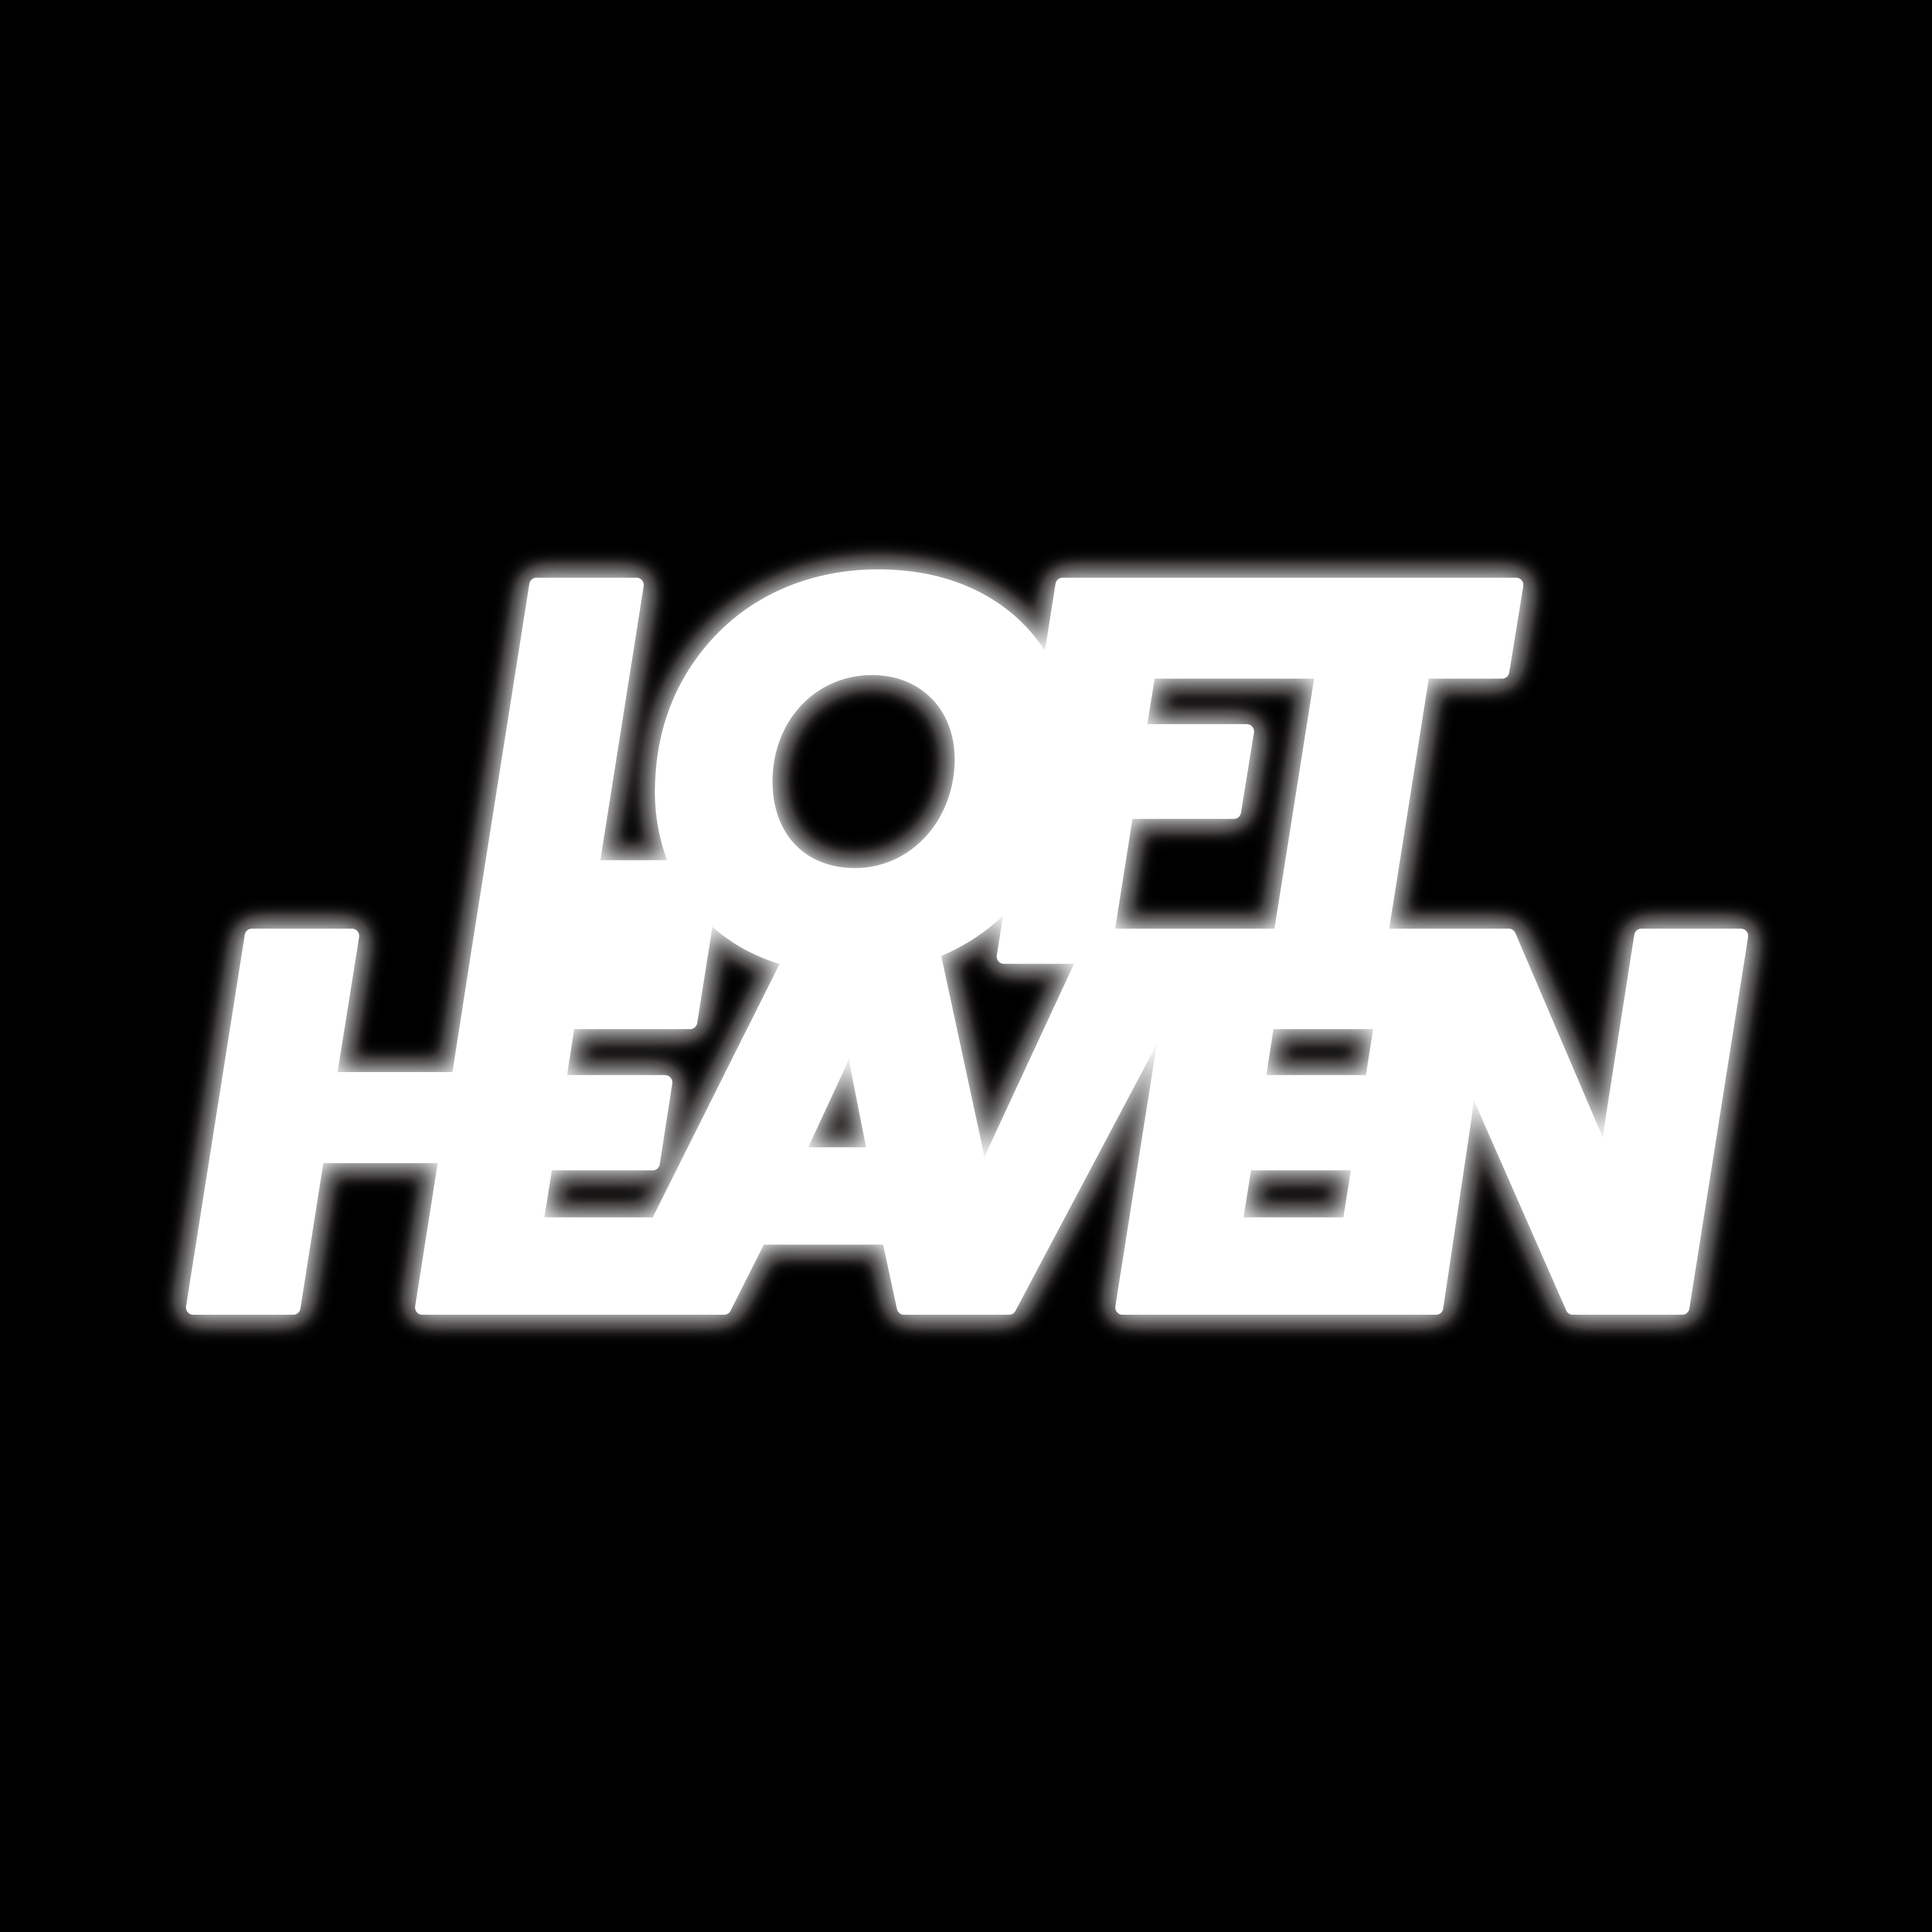 http://rooftop.cc/news/2018/06/20/LOFT_HEAVEN_logo_glow.jpg